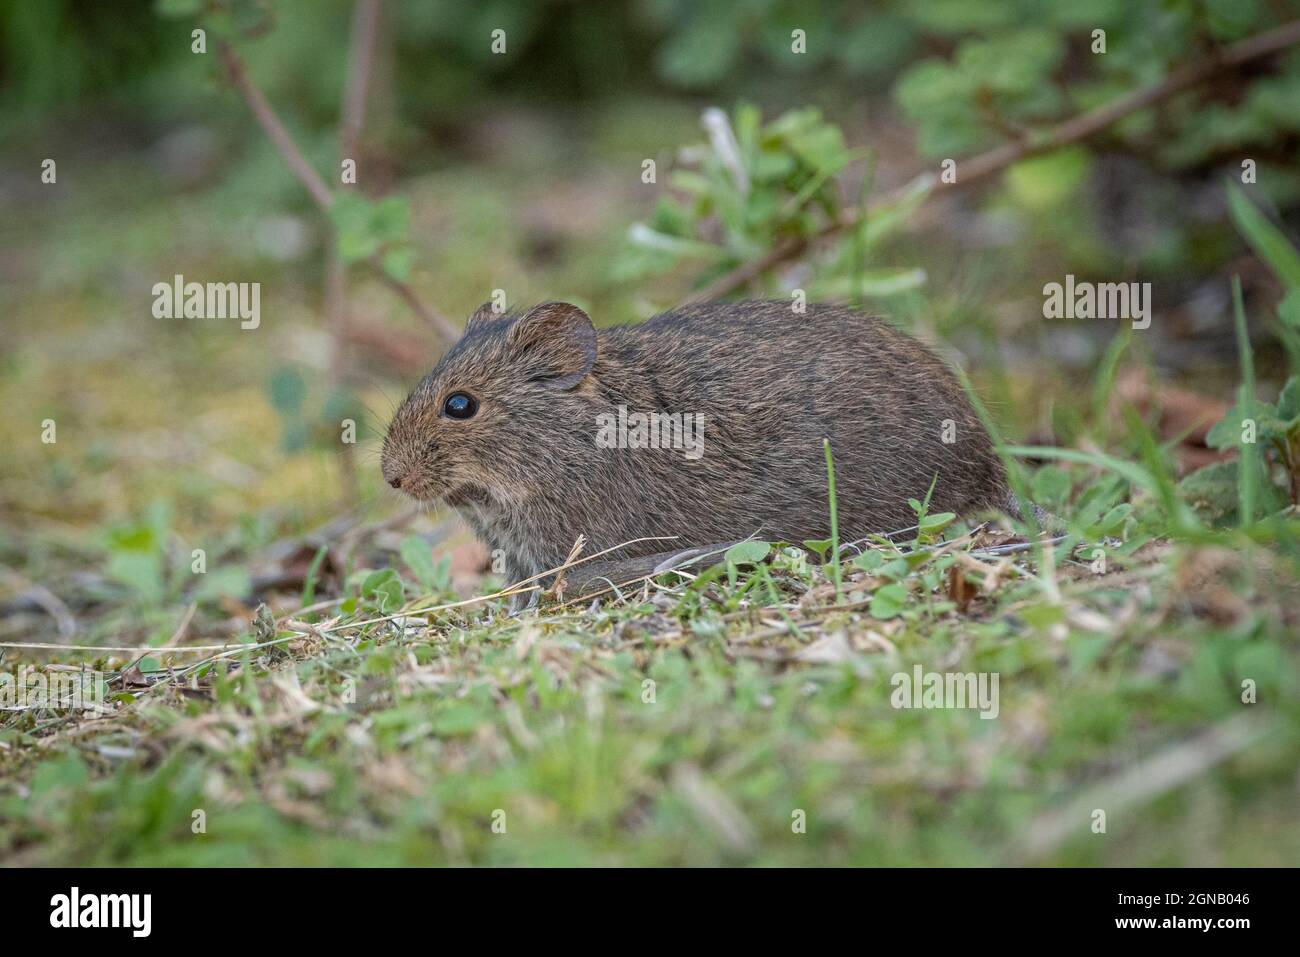 Vlei Rat (Otomys irroratus), Grahamstown/Makhana, Eastern Cape Province, Sudafrica, 18 ottobre 2020. Foto Stock